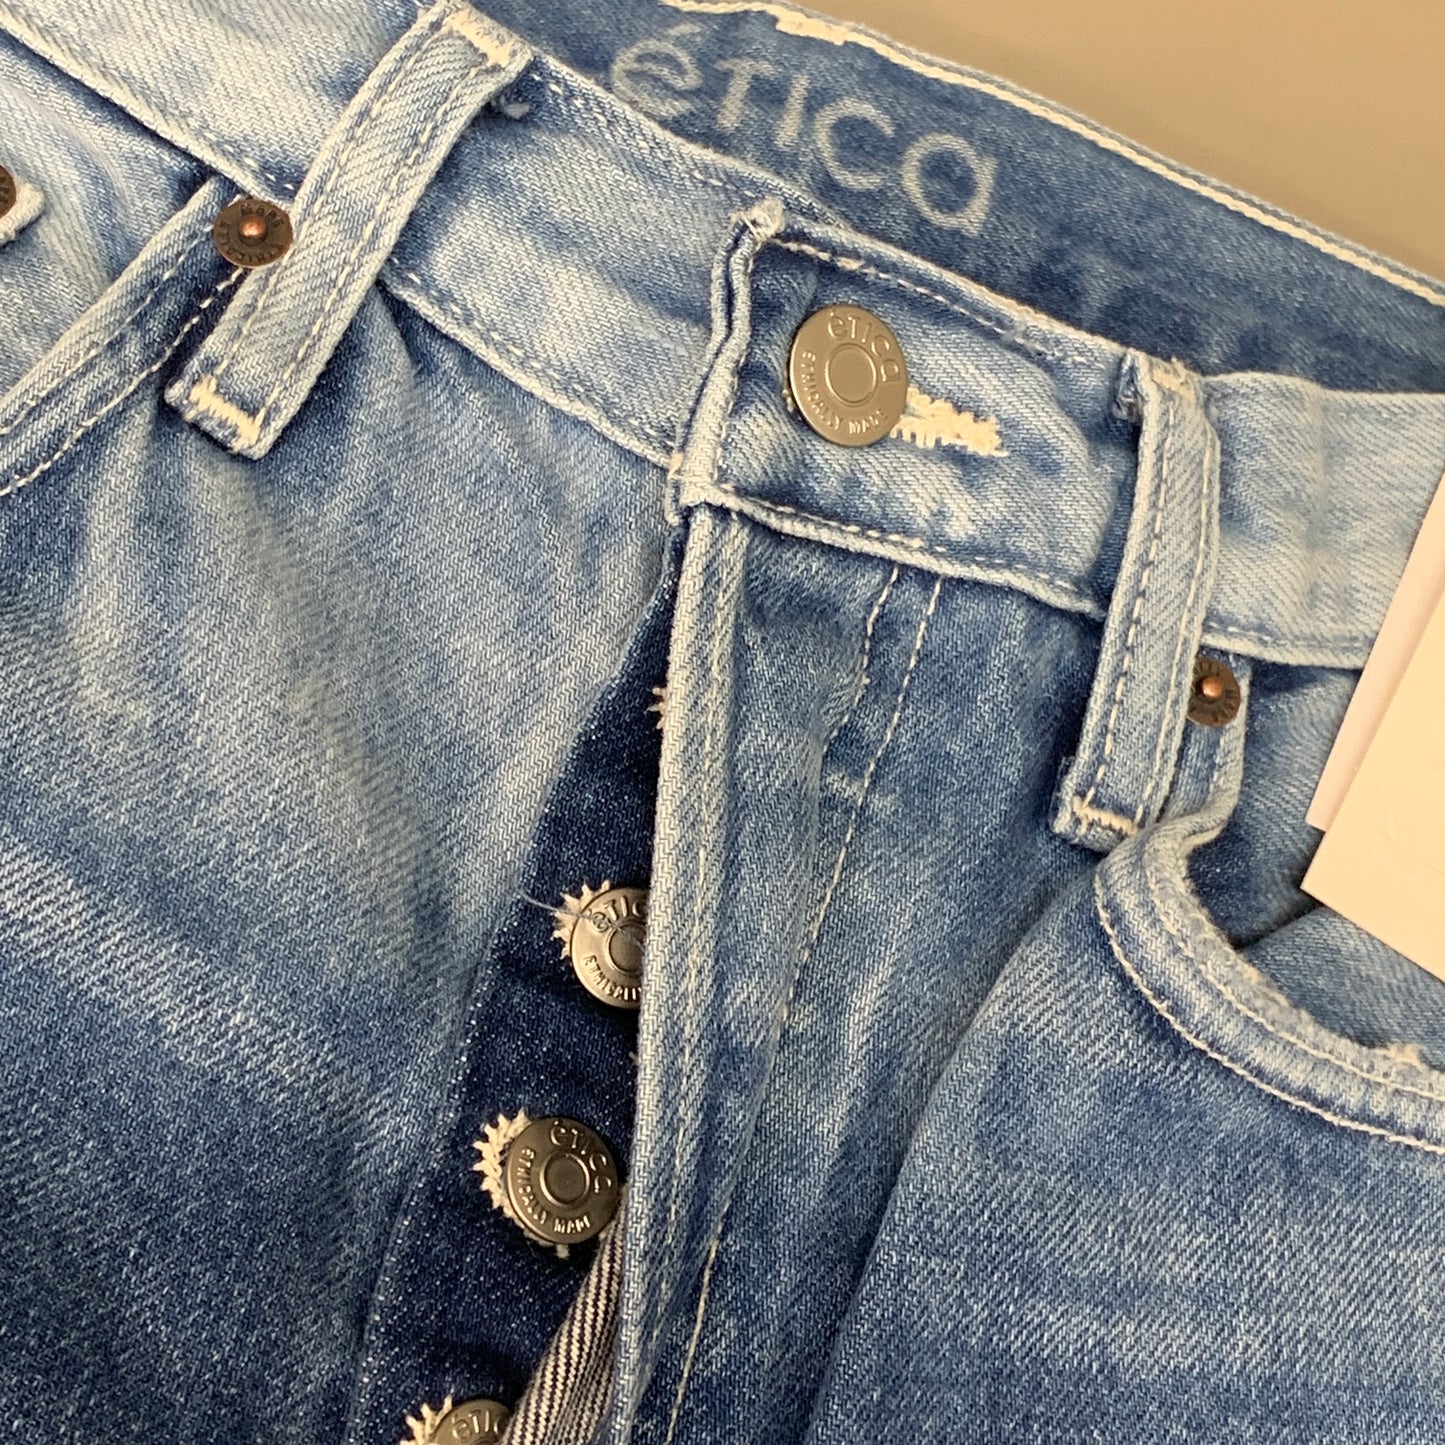 ETICA Tyler Vintage Straight Crop Jeans 100% Cotton Shipwreck Size 26 EW178114A